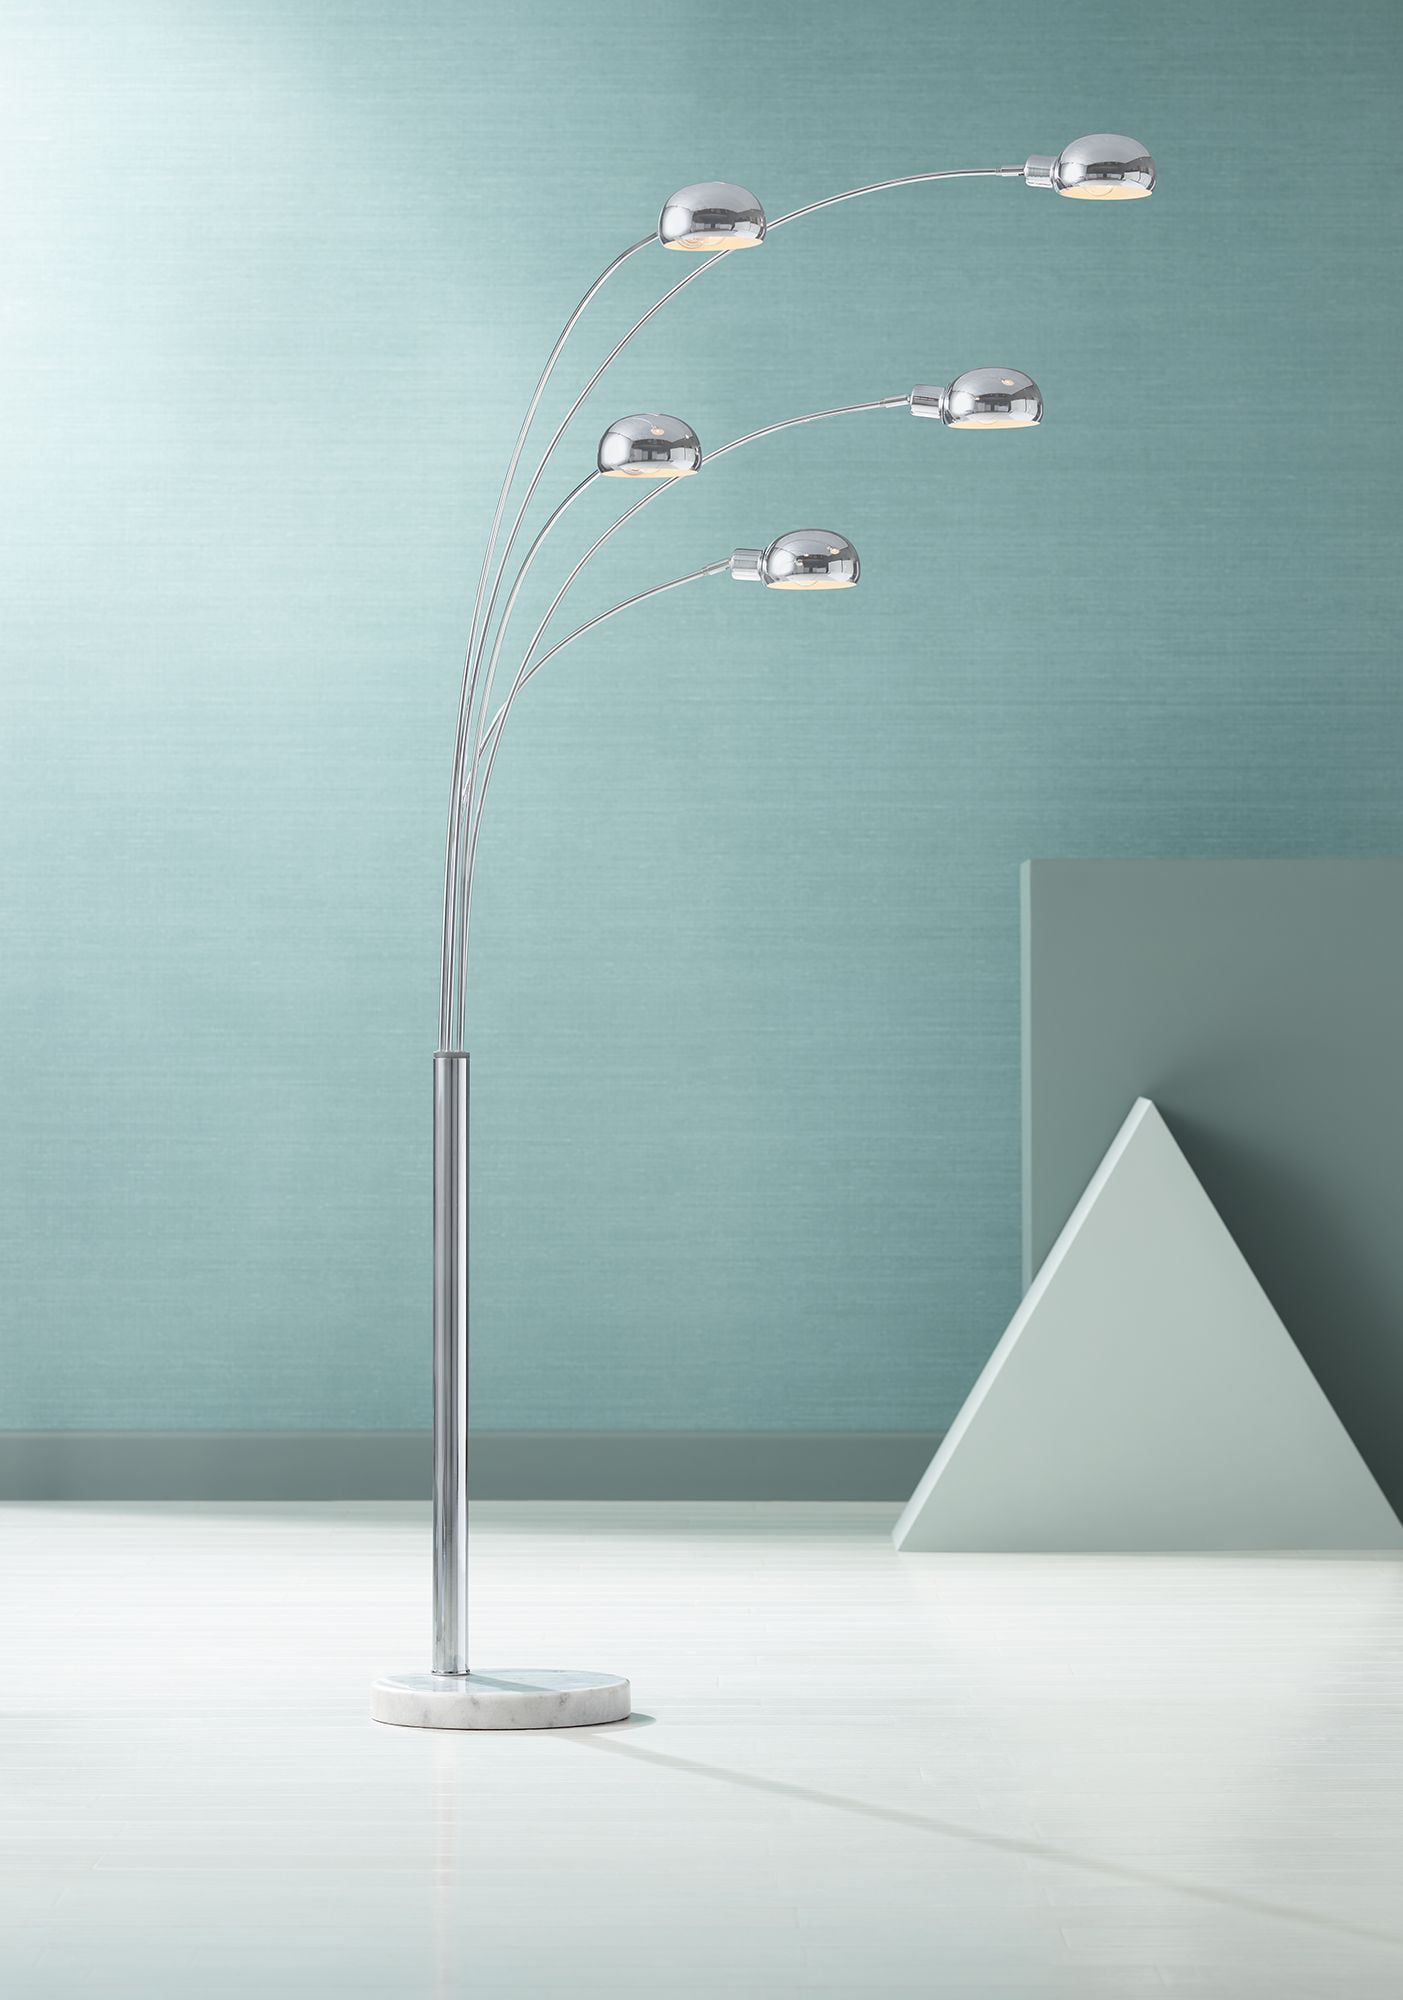 Possini Euro Design Mid Century Modern Arc Floor Lamp 5 Light 78" Tall  Chrome Marble Base Swivel Dome Shades For Living Room Reading – Walmart In 5 Light Arc Floor Lamps (View 11 of 15)